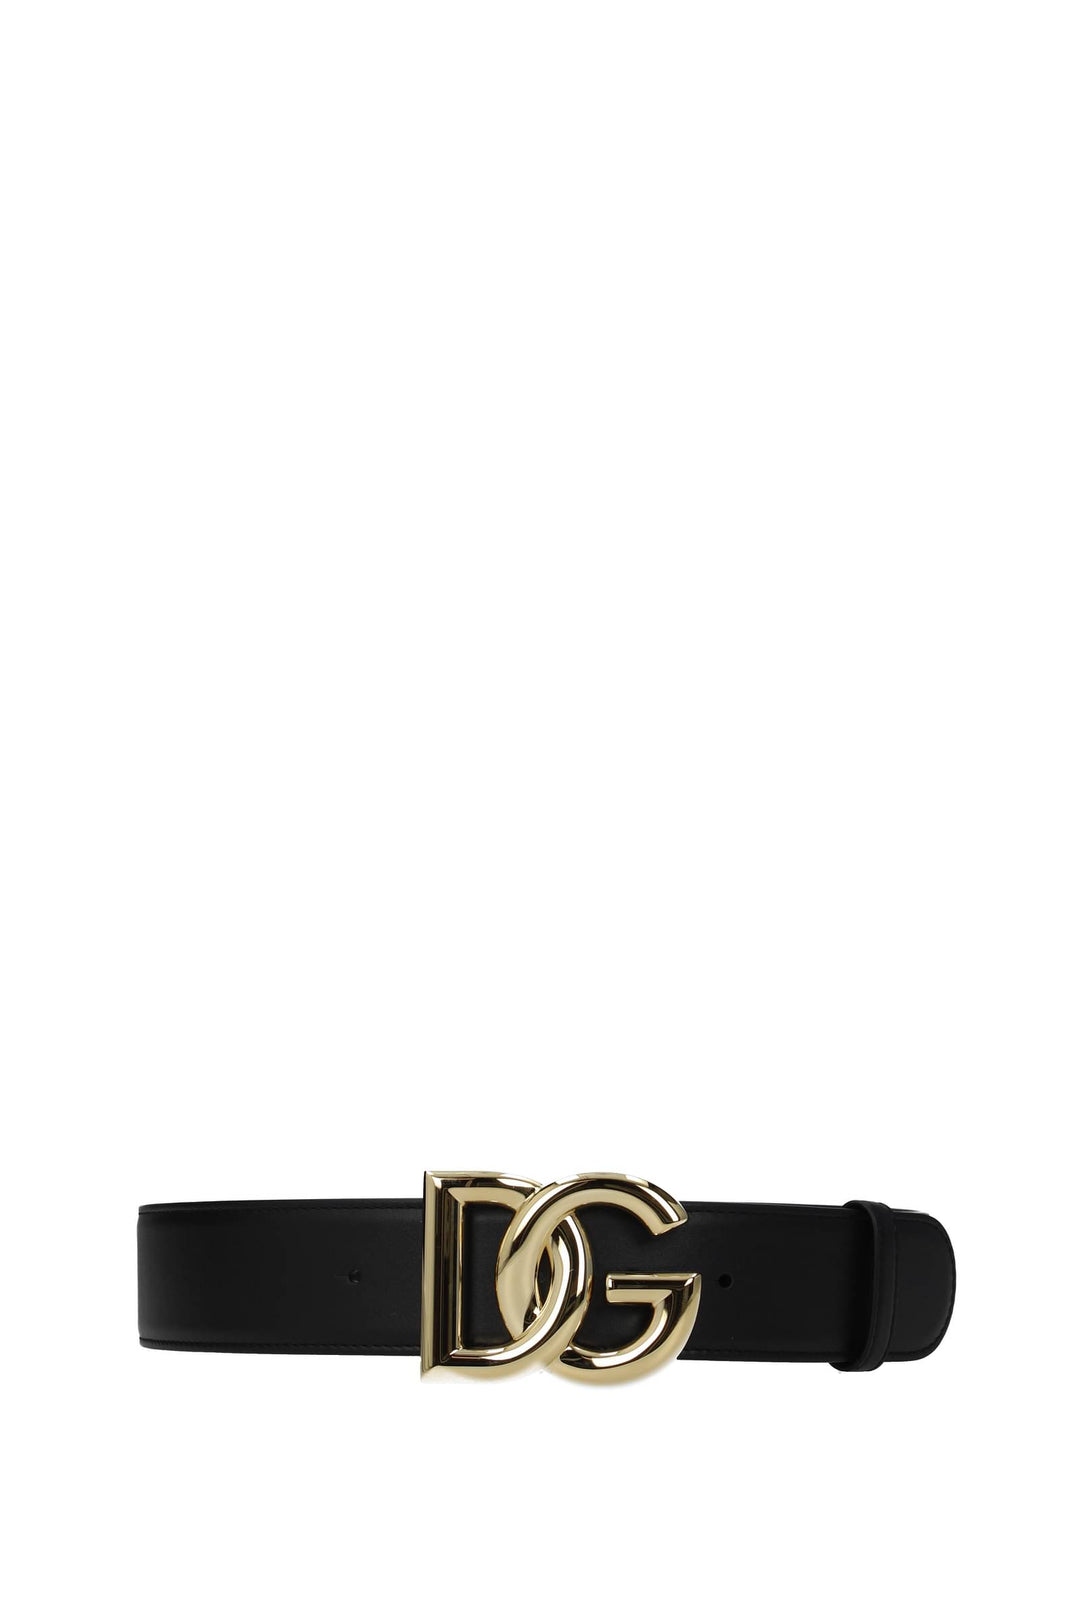 Cinture Regular Pelle Nero Oro - Dolce&Gabbana - Donna